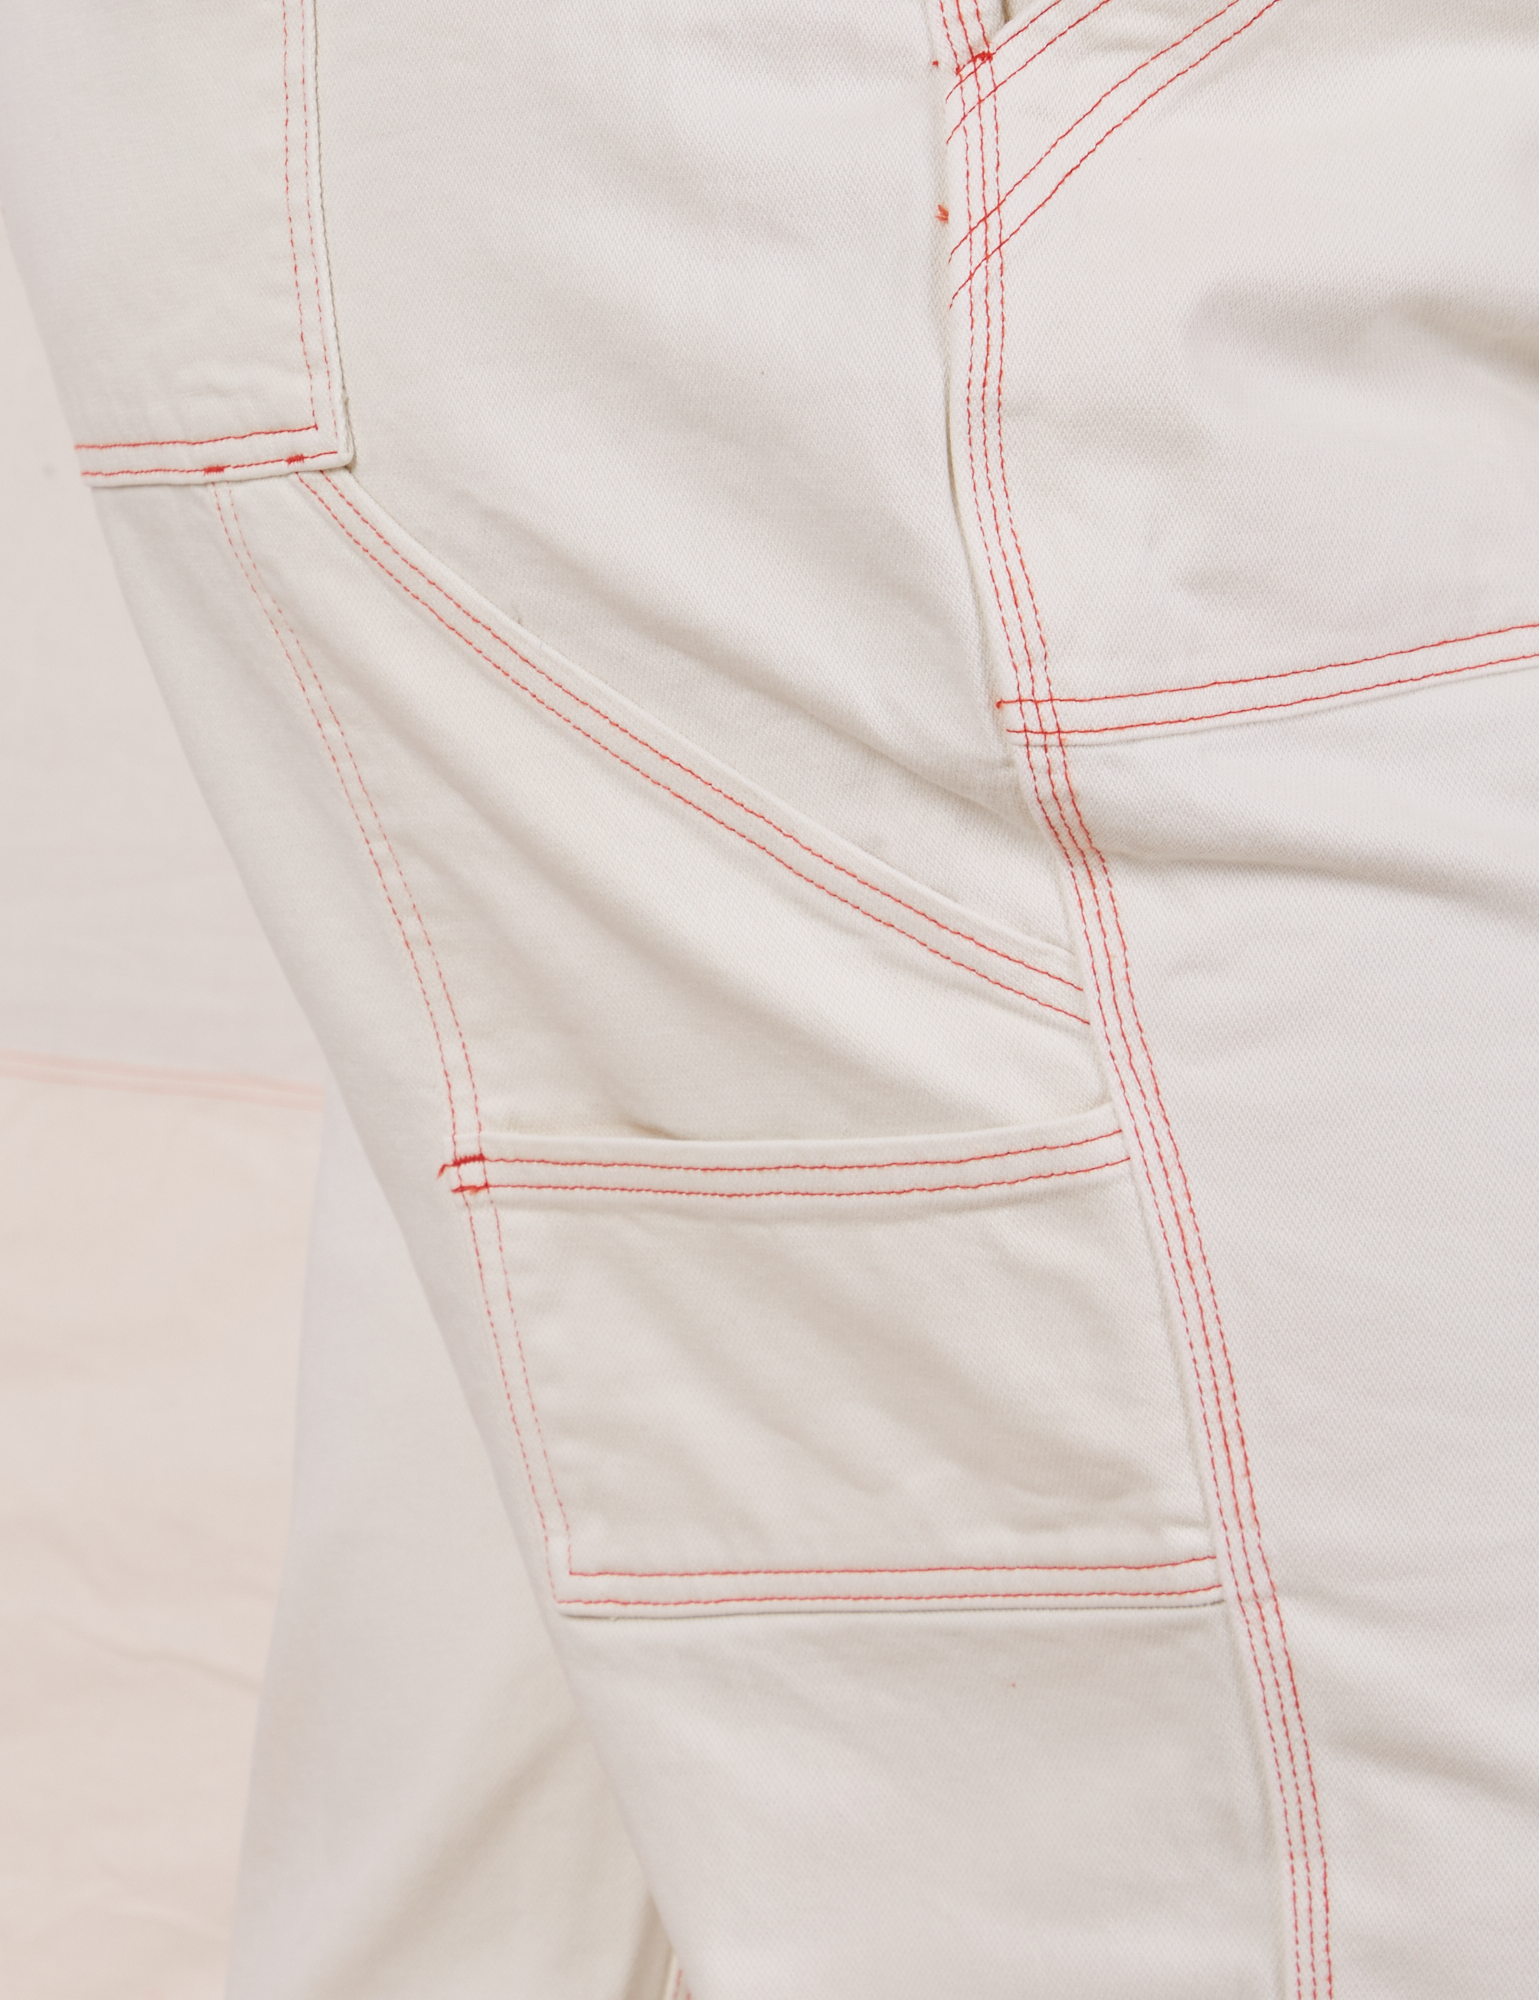 Carpenter Jeans in Vintage Off-White pant leg close up. Orange contrast top stitching. 